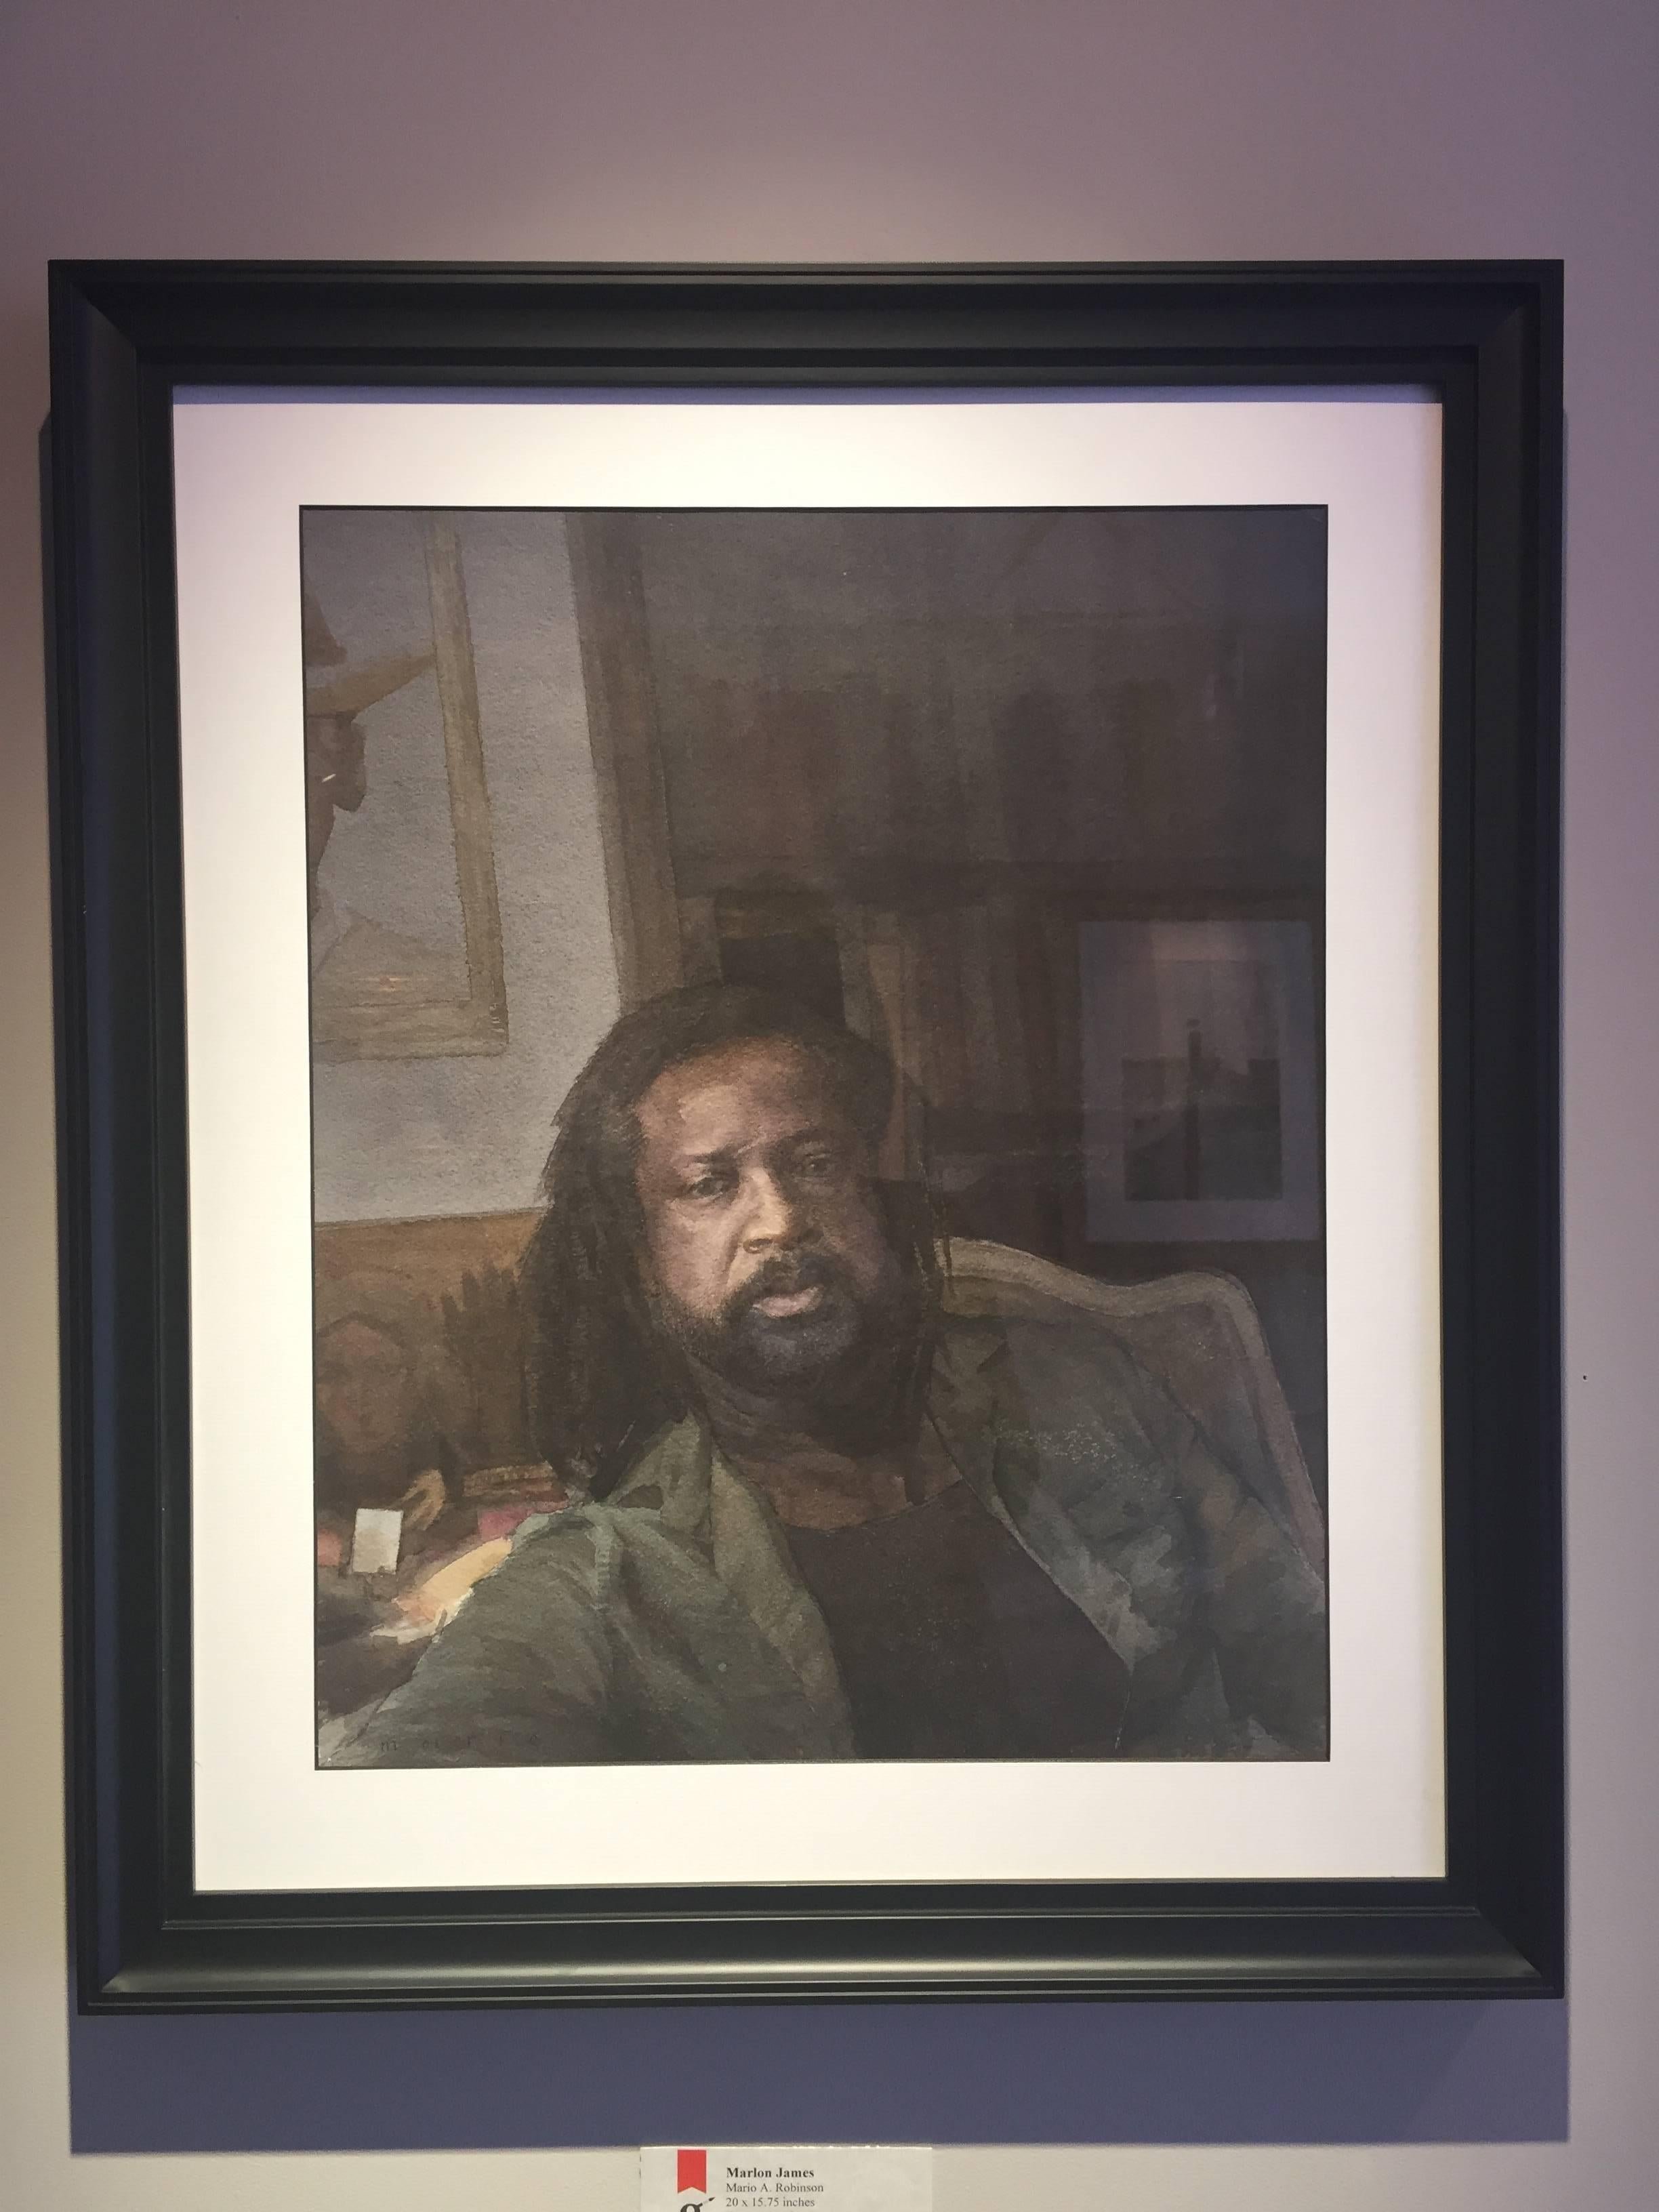 Marlon James - American Impressionist Art by Mario Robinson